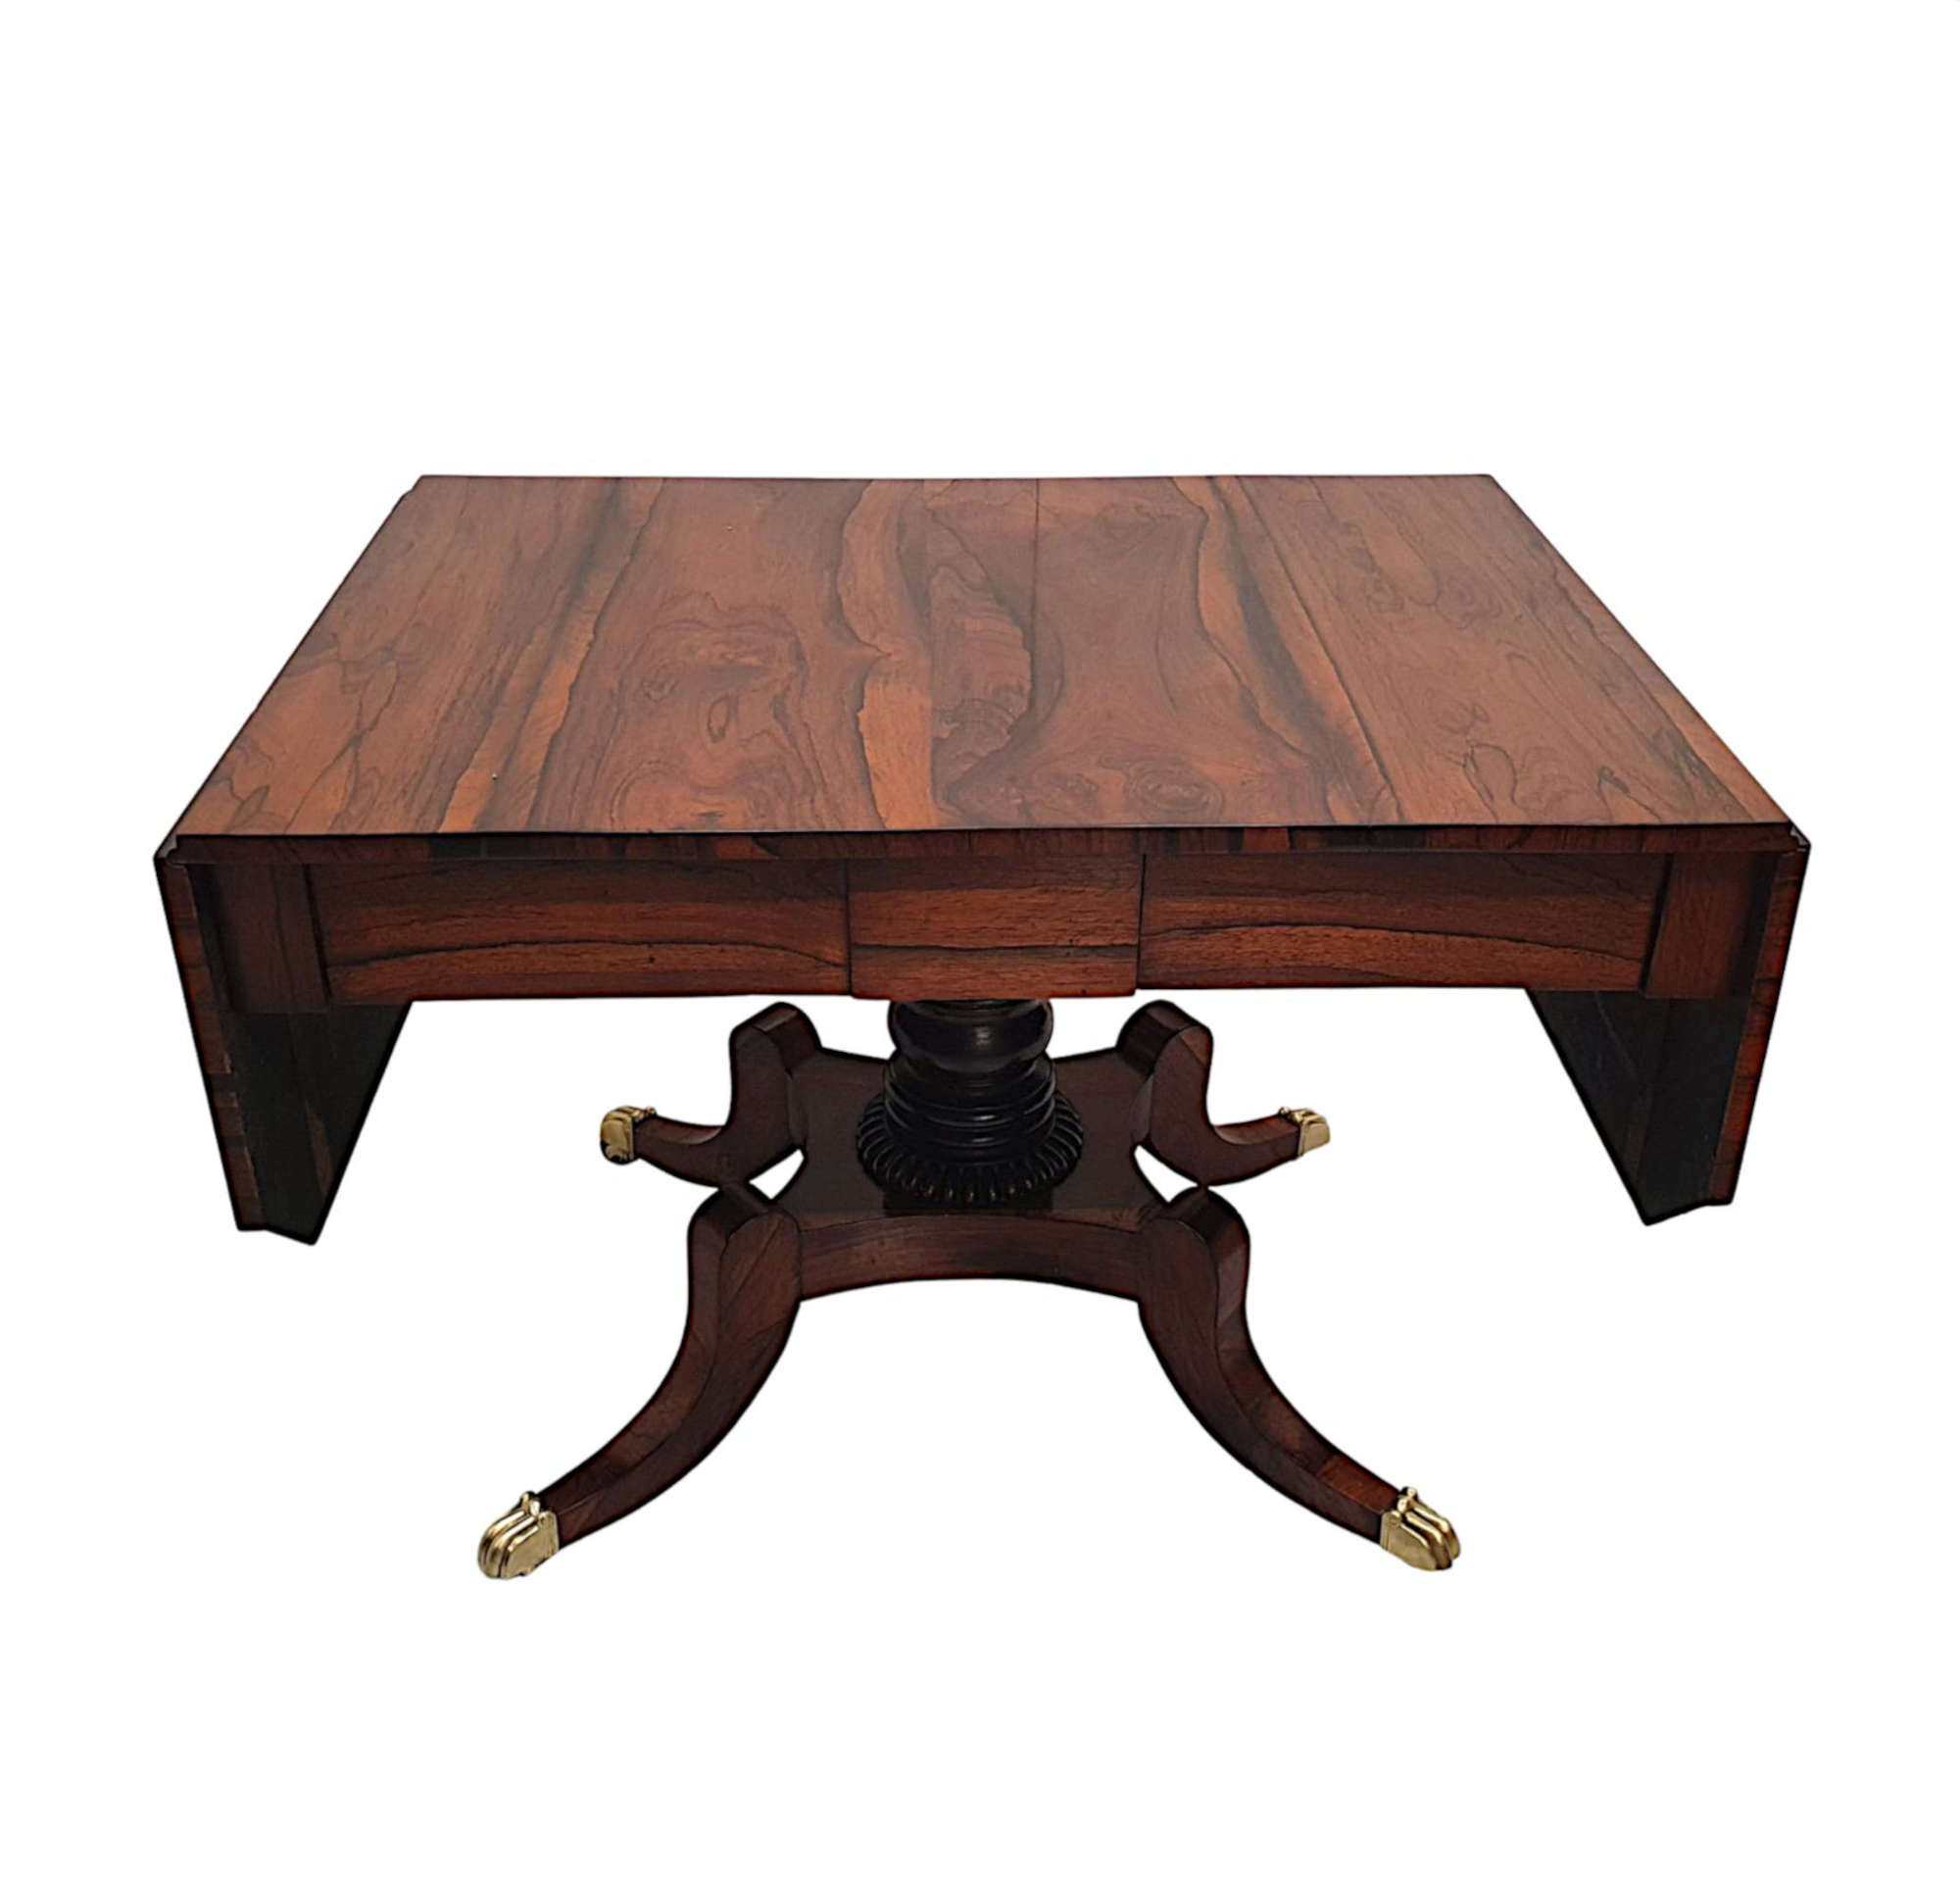 A Fine Early 19th Century Regency Sofa Table